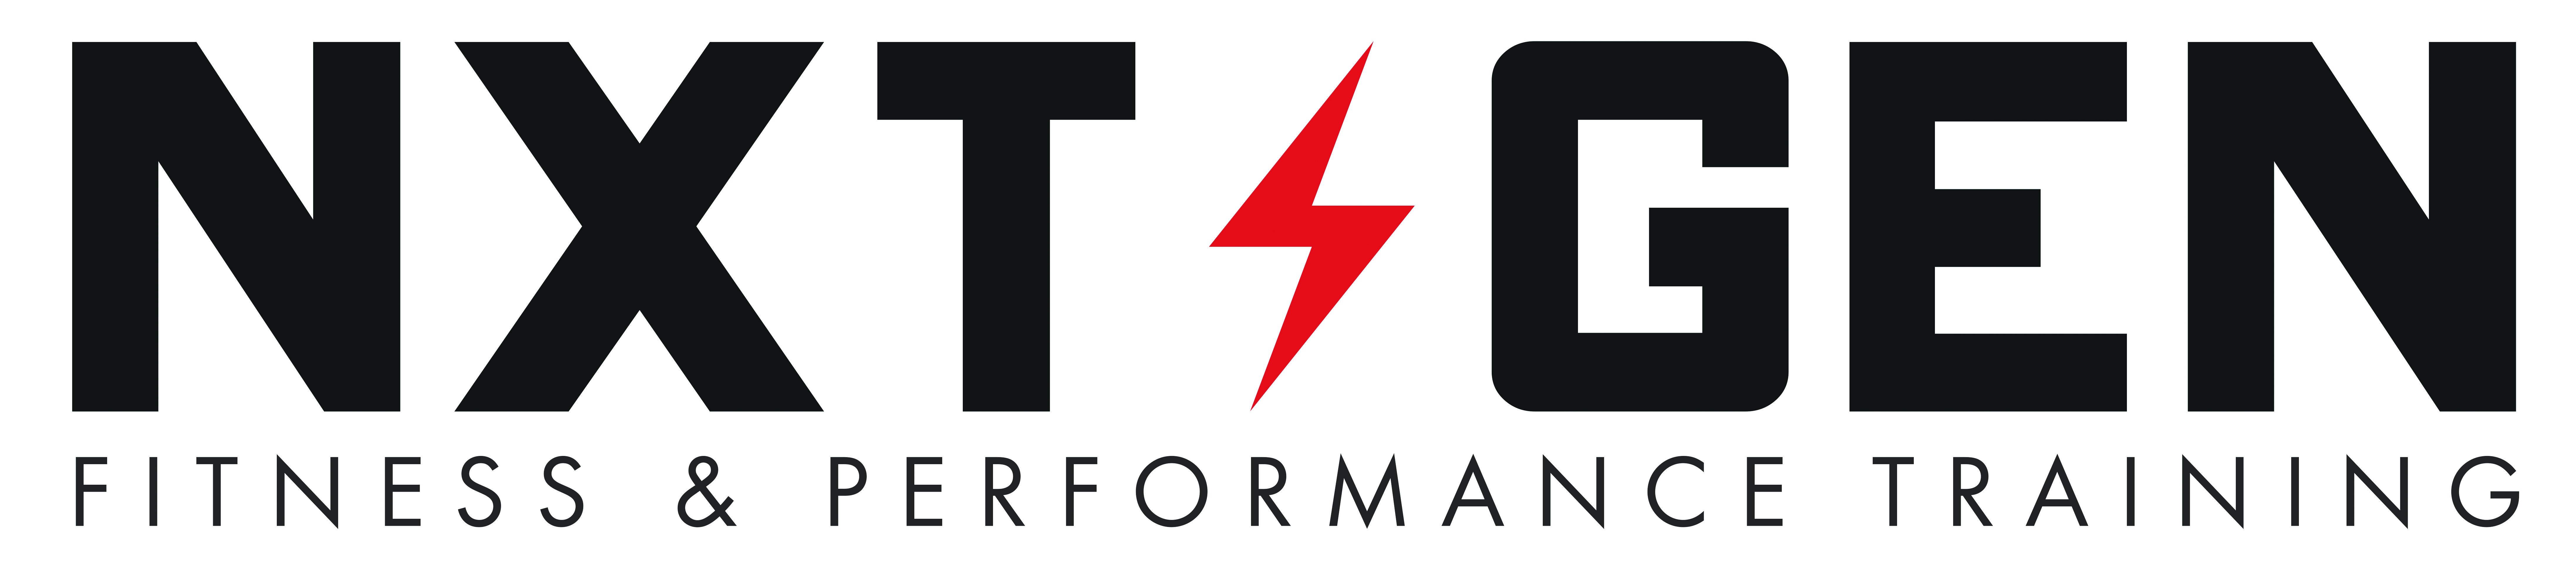 NXT GEN Fitness & Performance Training logo